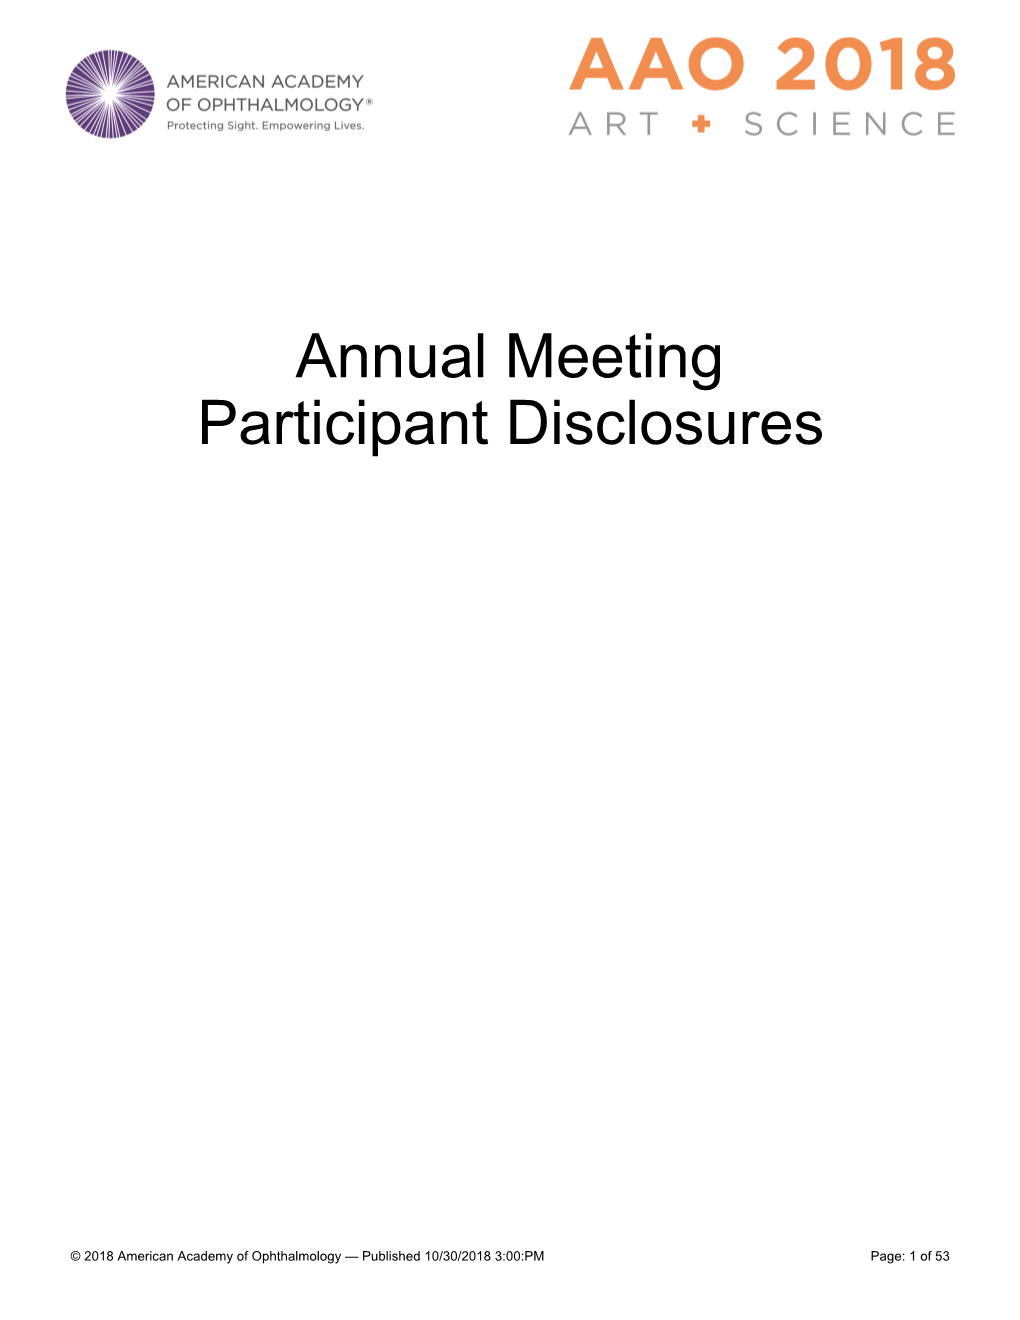 Annual Meeting Participant Disclosures